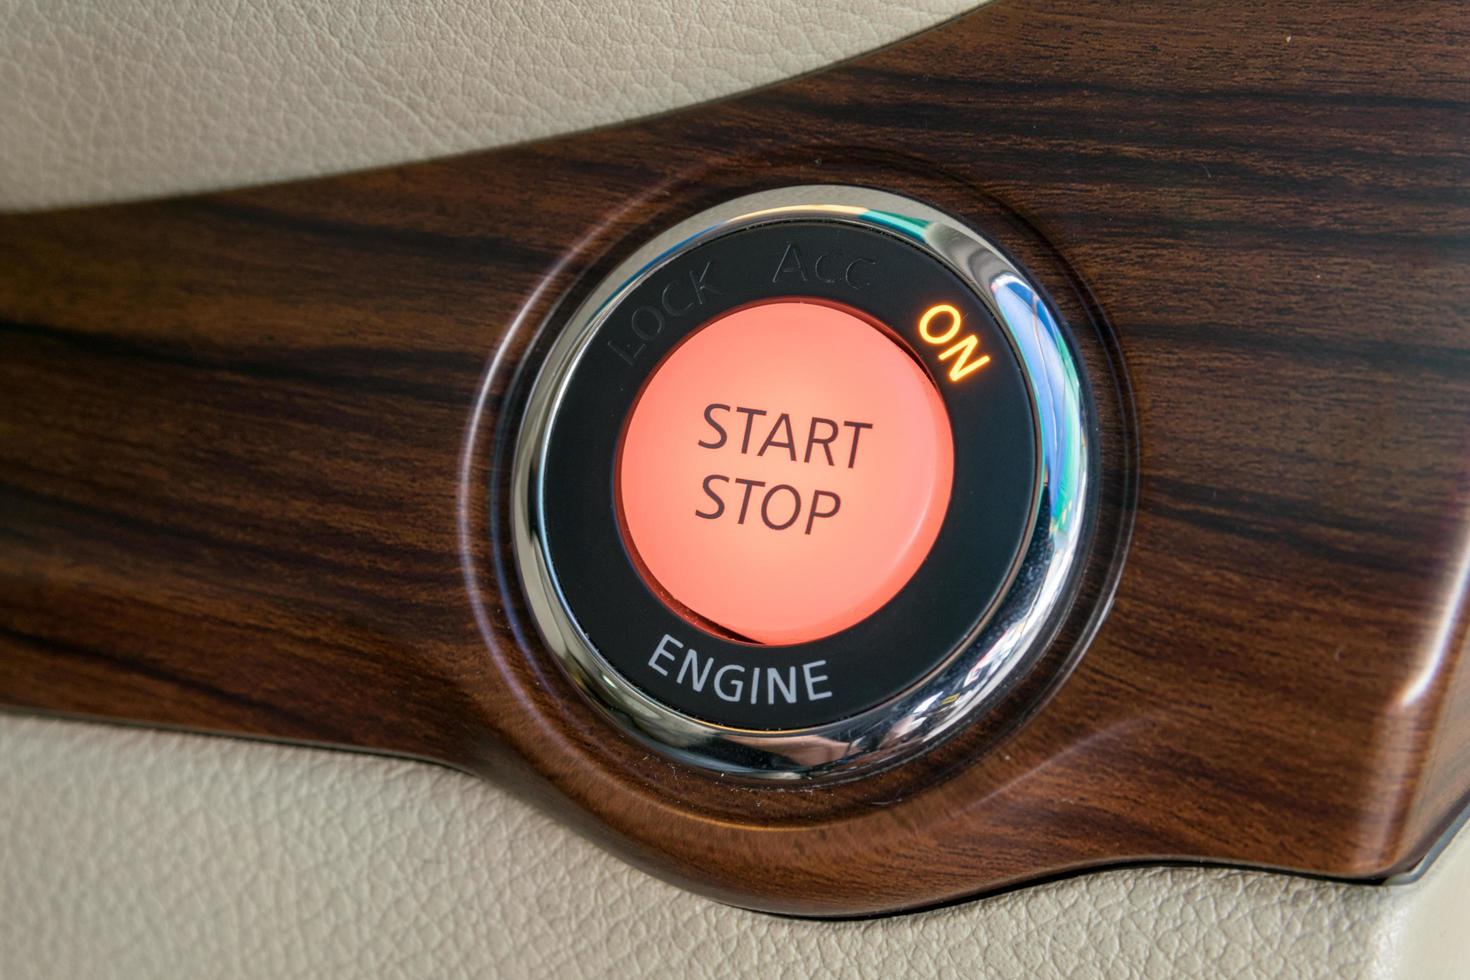 Motor-Start-Stopp-Taste aus einem modernen Autoinnenraum foto